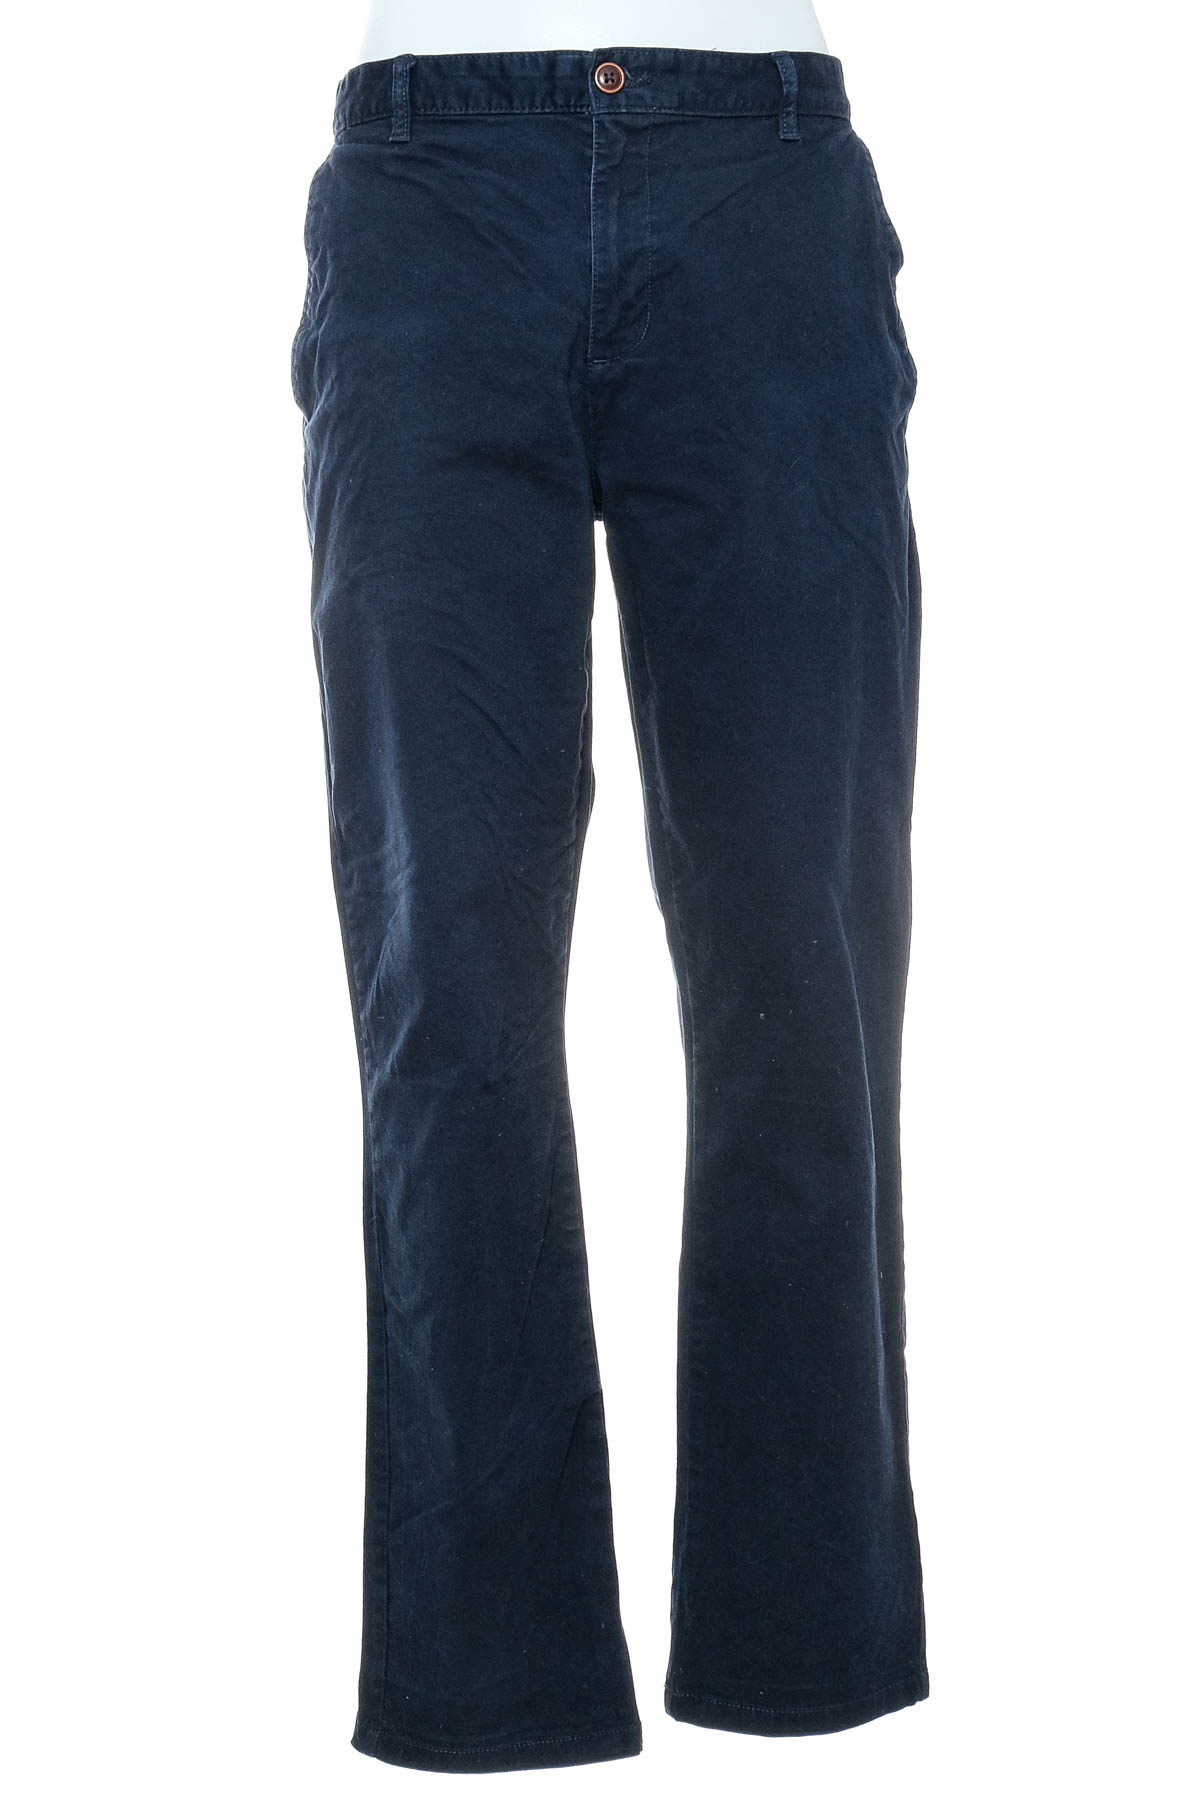 Men's trousers - LC Waikiki BASIC - 0